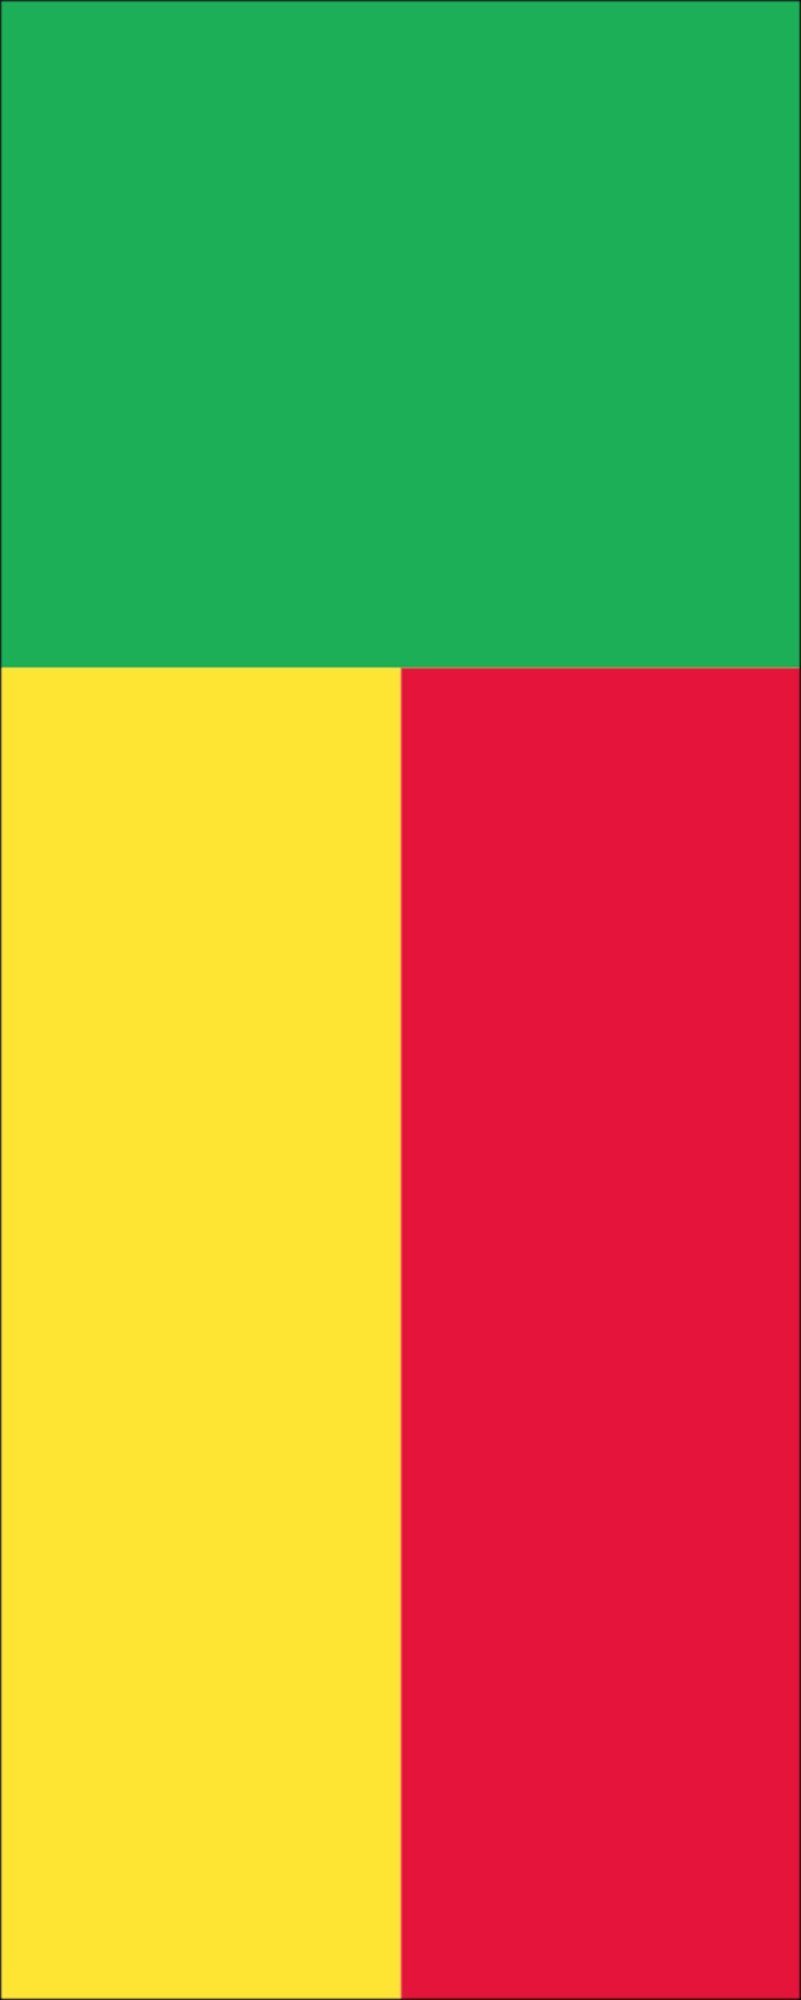 Benin 110 Flagge g/m² Flagge Hochformat flaggenmeer